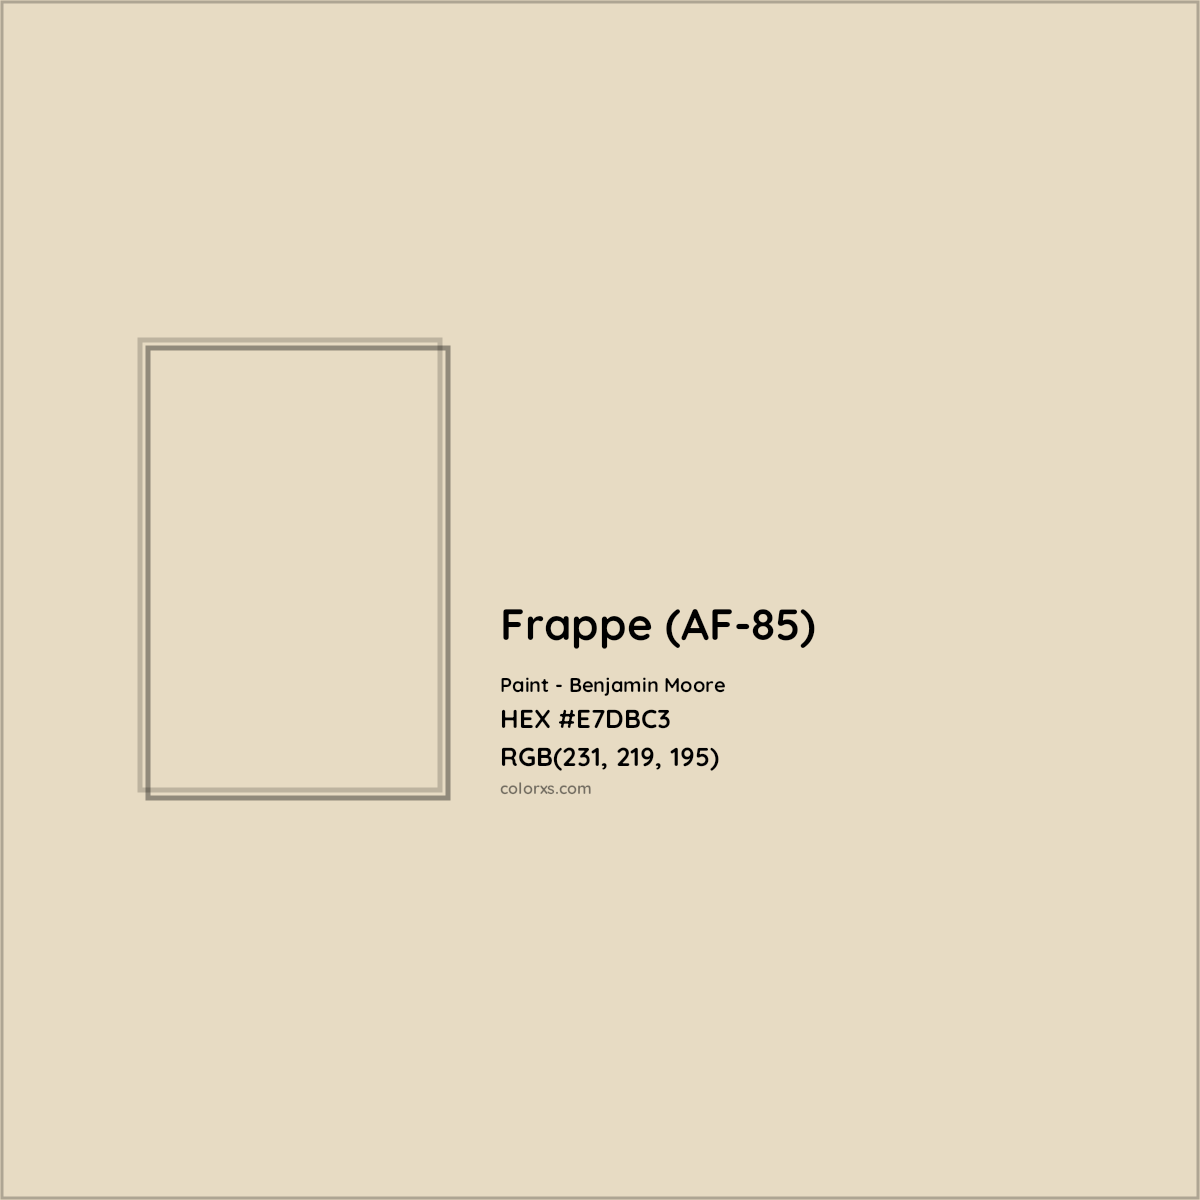 HEX #E7DBC3 Frappe (AF-85) Paint Benjamin Moore - Color Code